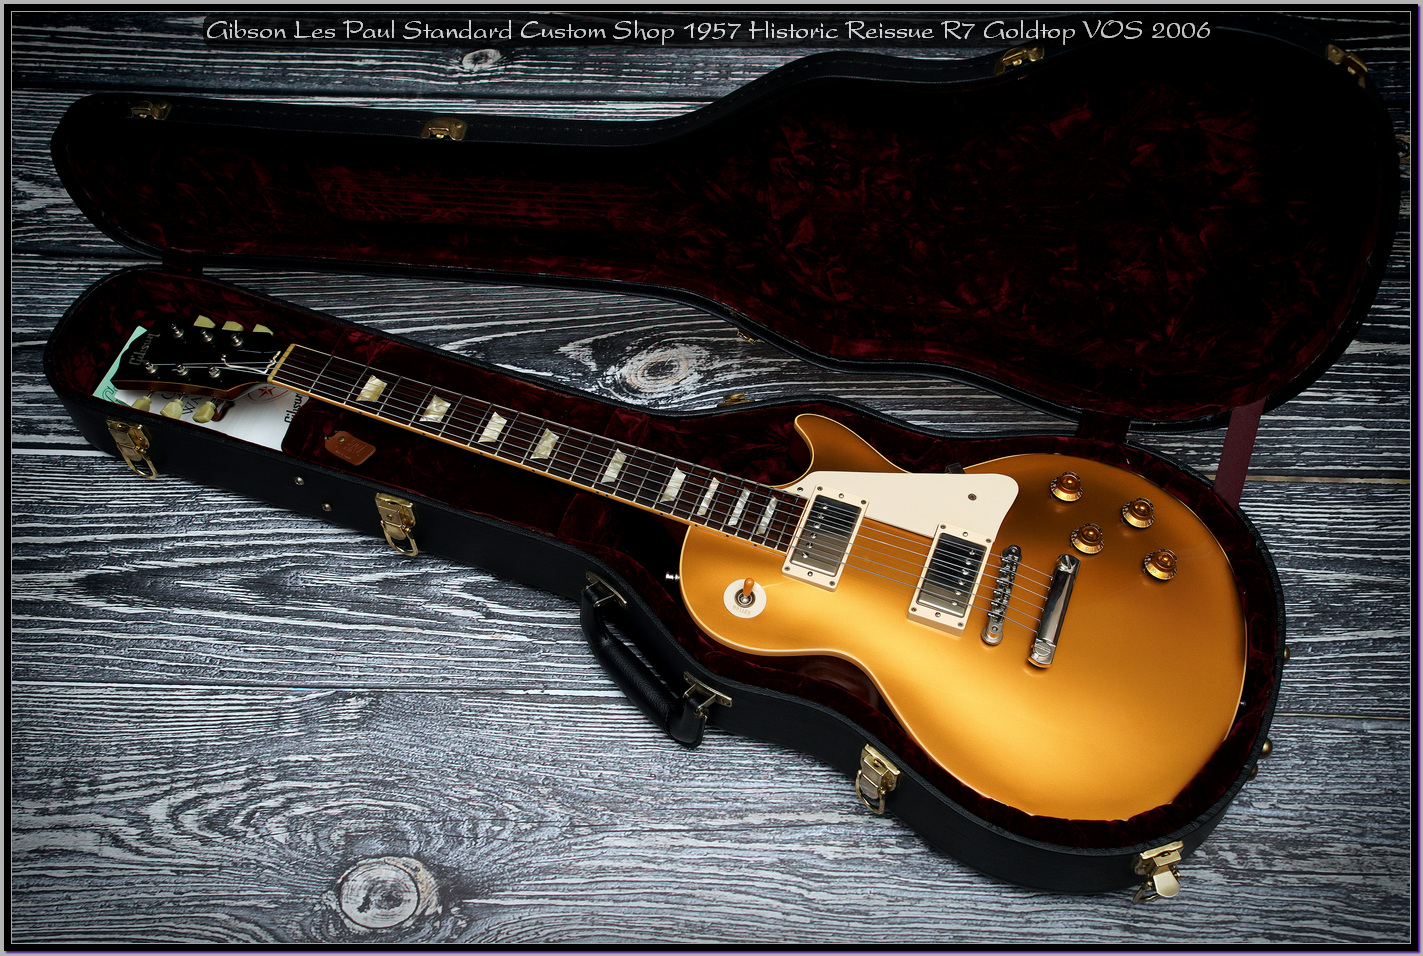 Gibson Les Paul Standard Custom Shop 1957 Historic Reissue R7 Goldtop VOS 2006 12_x1400.jpg